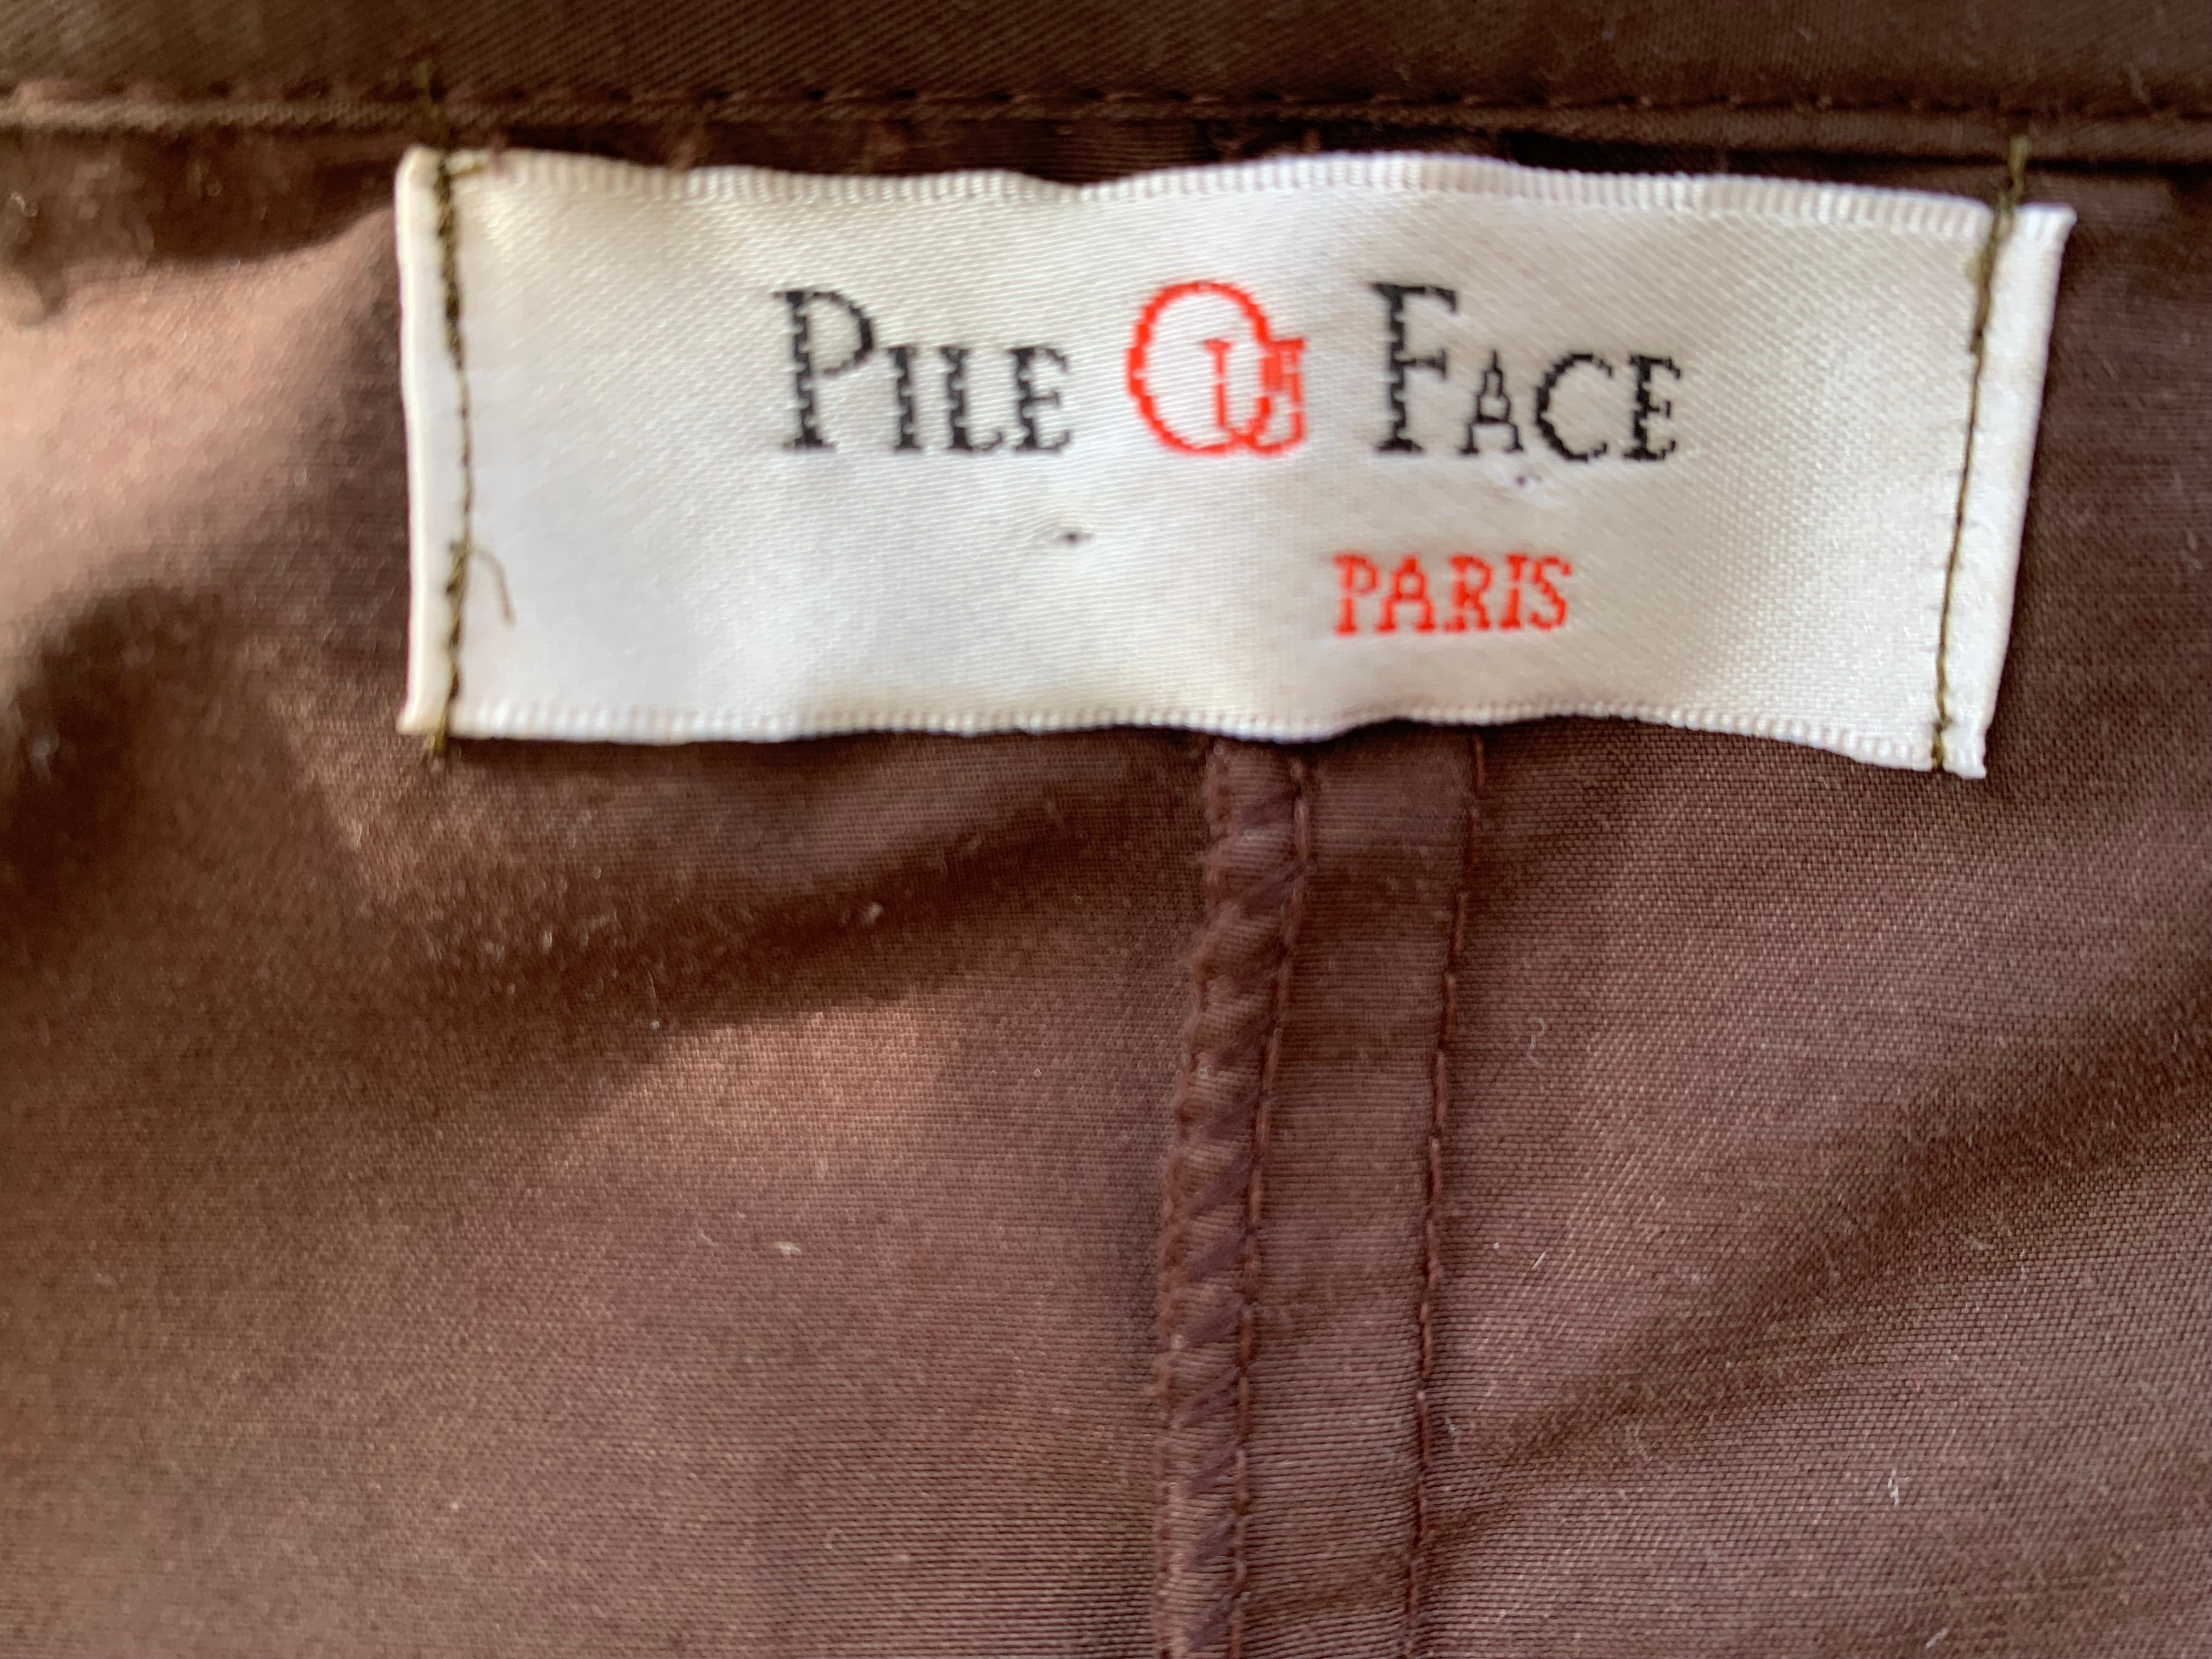 Pile Ou Face Skirt, M